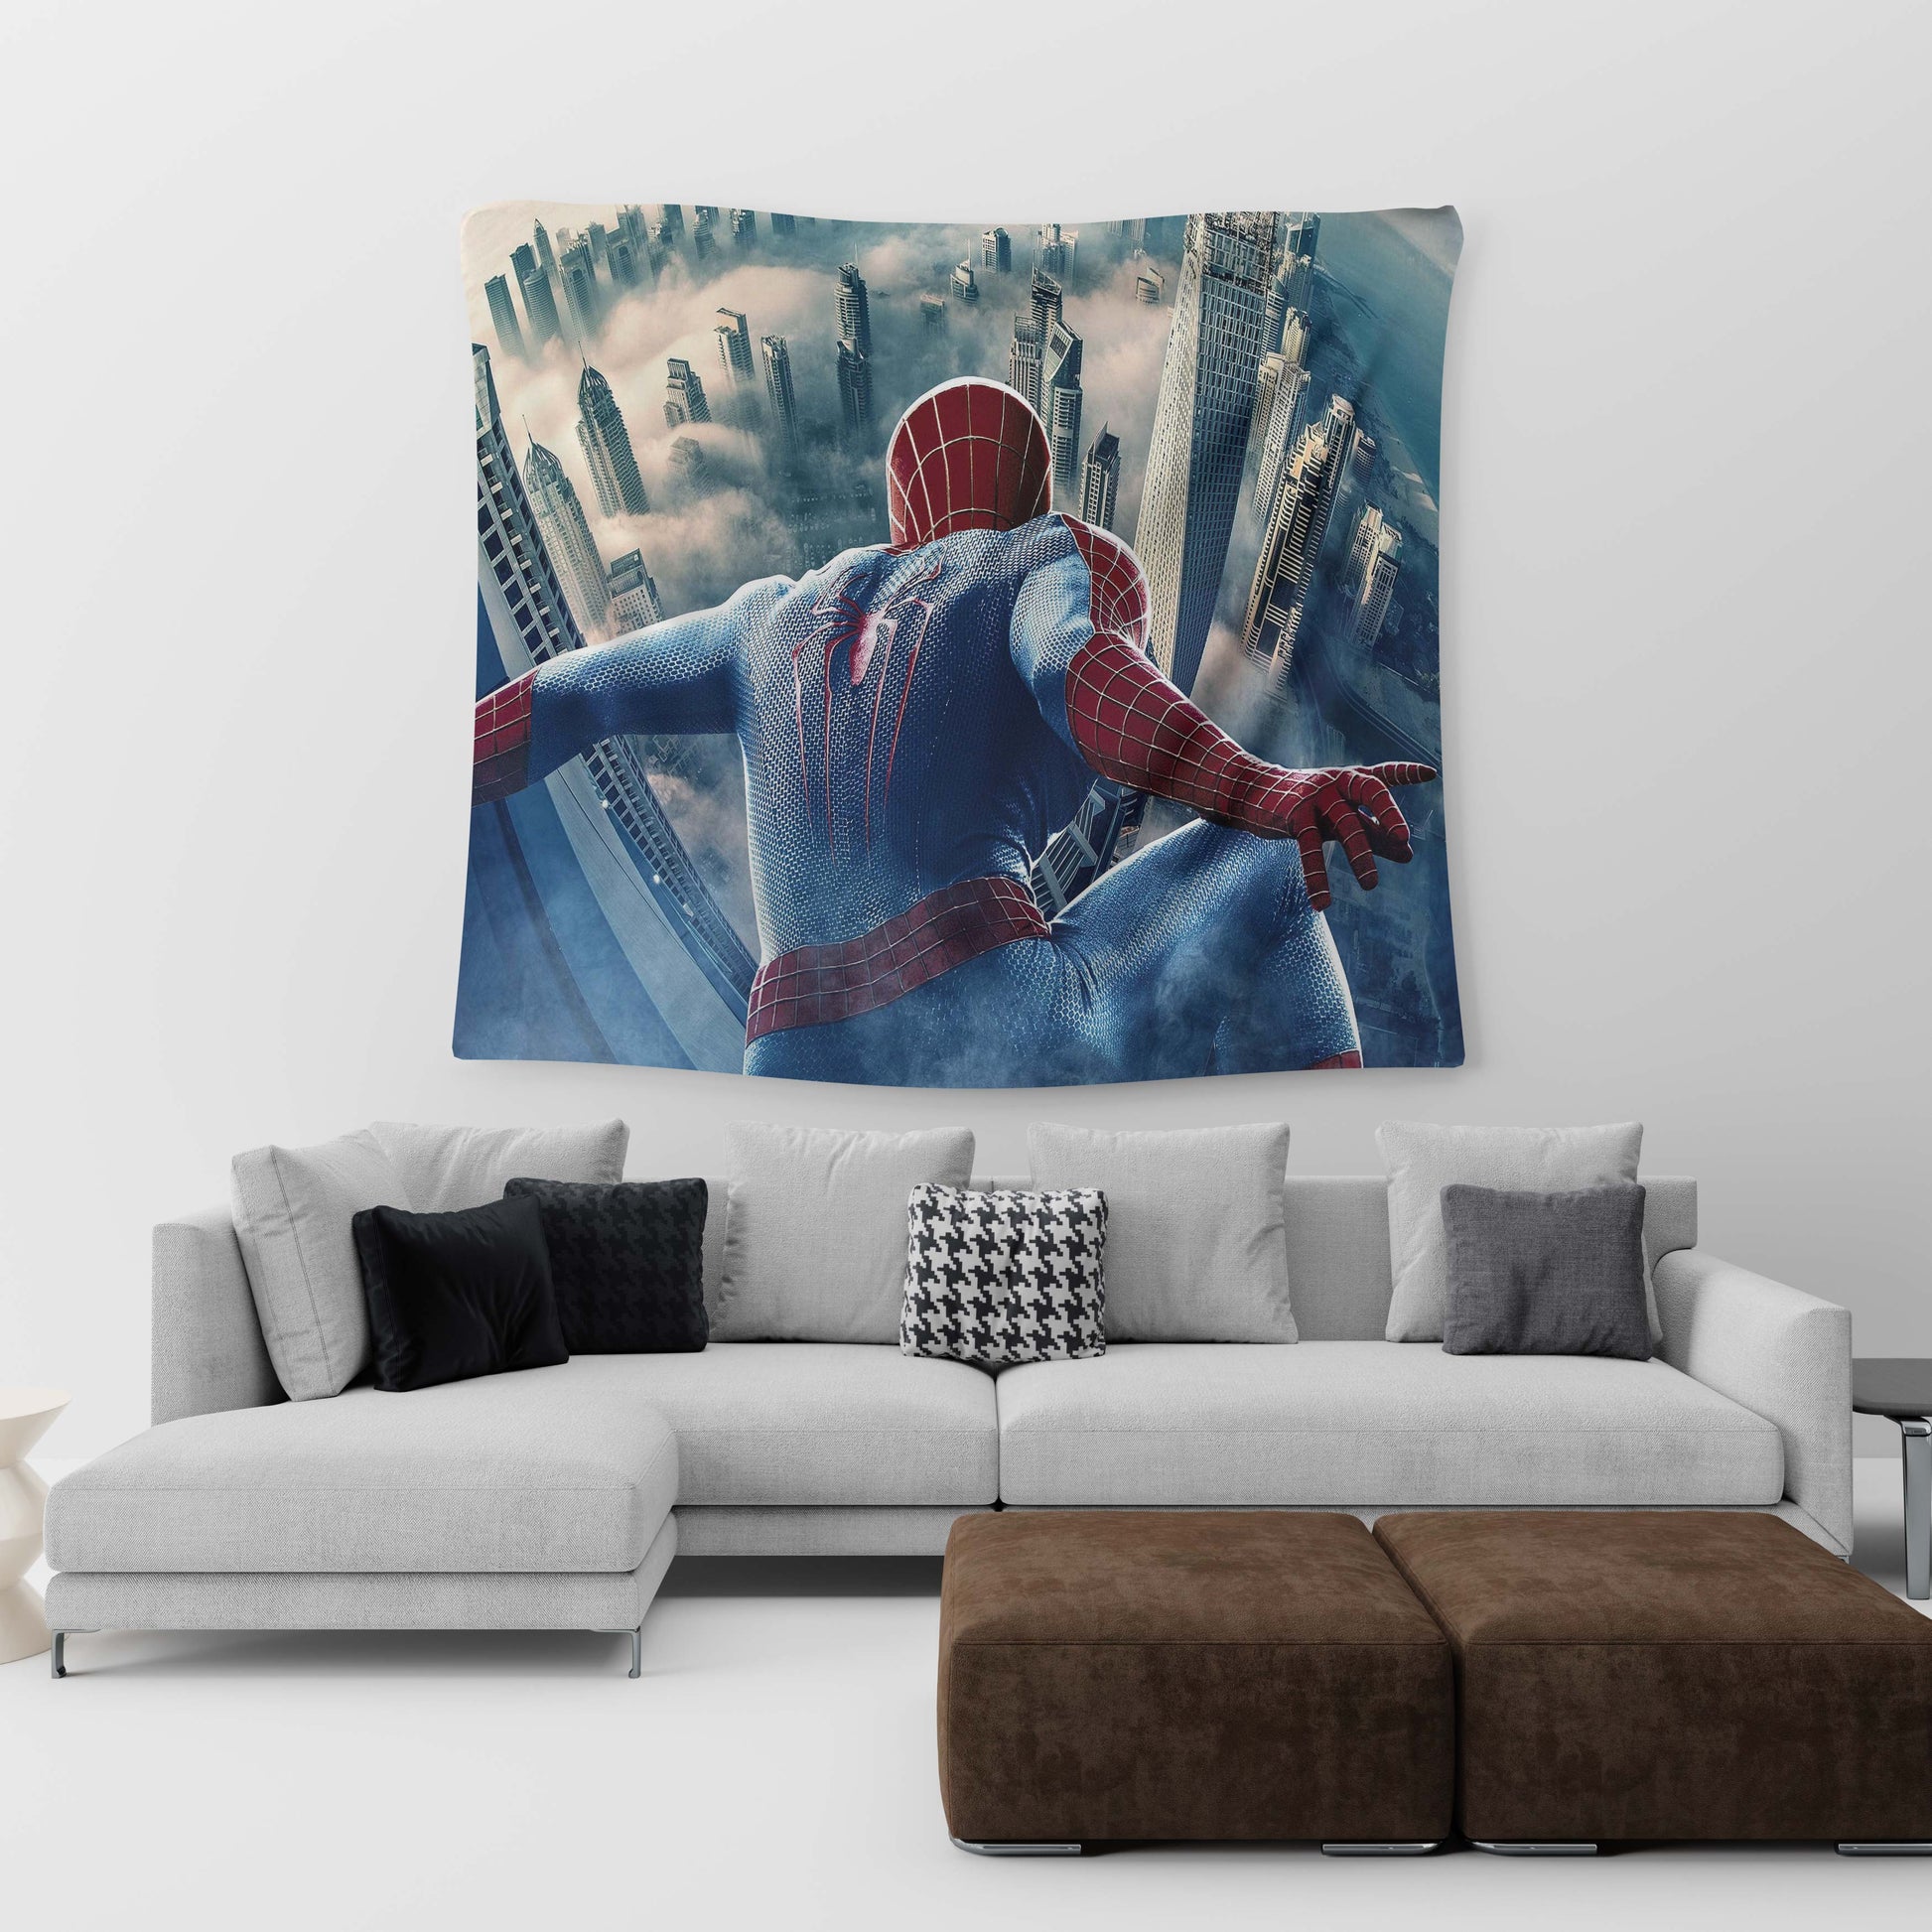 Spider-Man Skyline Tapestry trendy home